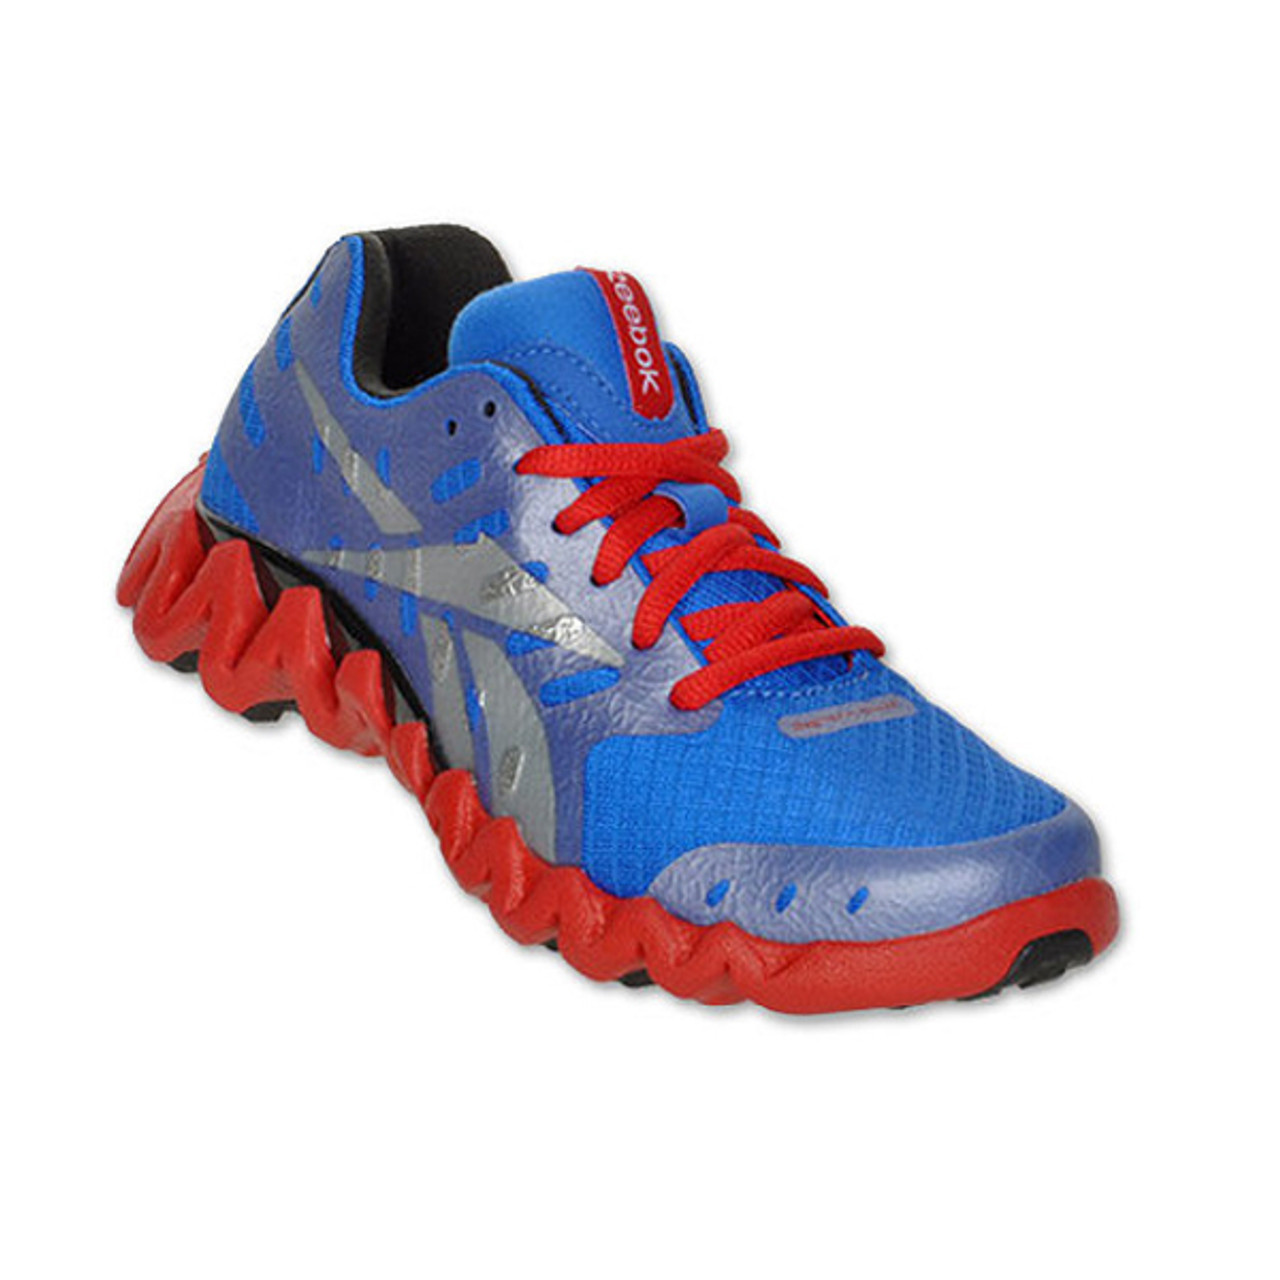 Reebok Zigtech Shark Vital Blue/Red Boys Running Shoes - | Discount Reebok Childrens Athletic & More - Shoolu.com